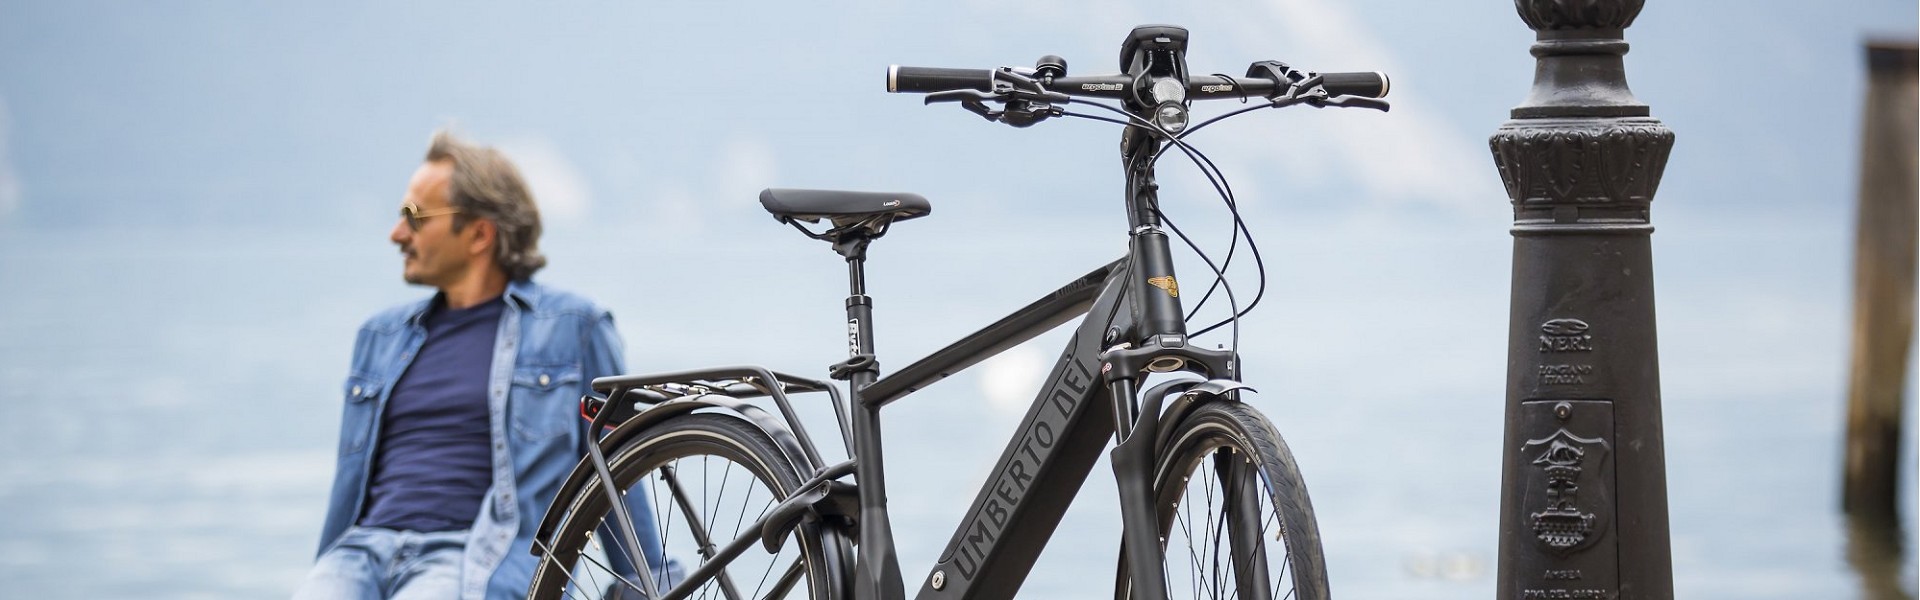 batterie e-bike 2019 | bicicletta elettrica leggerissima | noleggio mountain bike genova